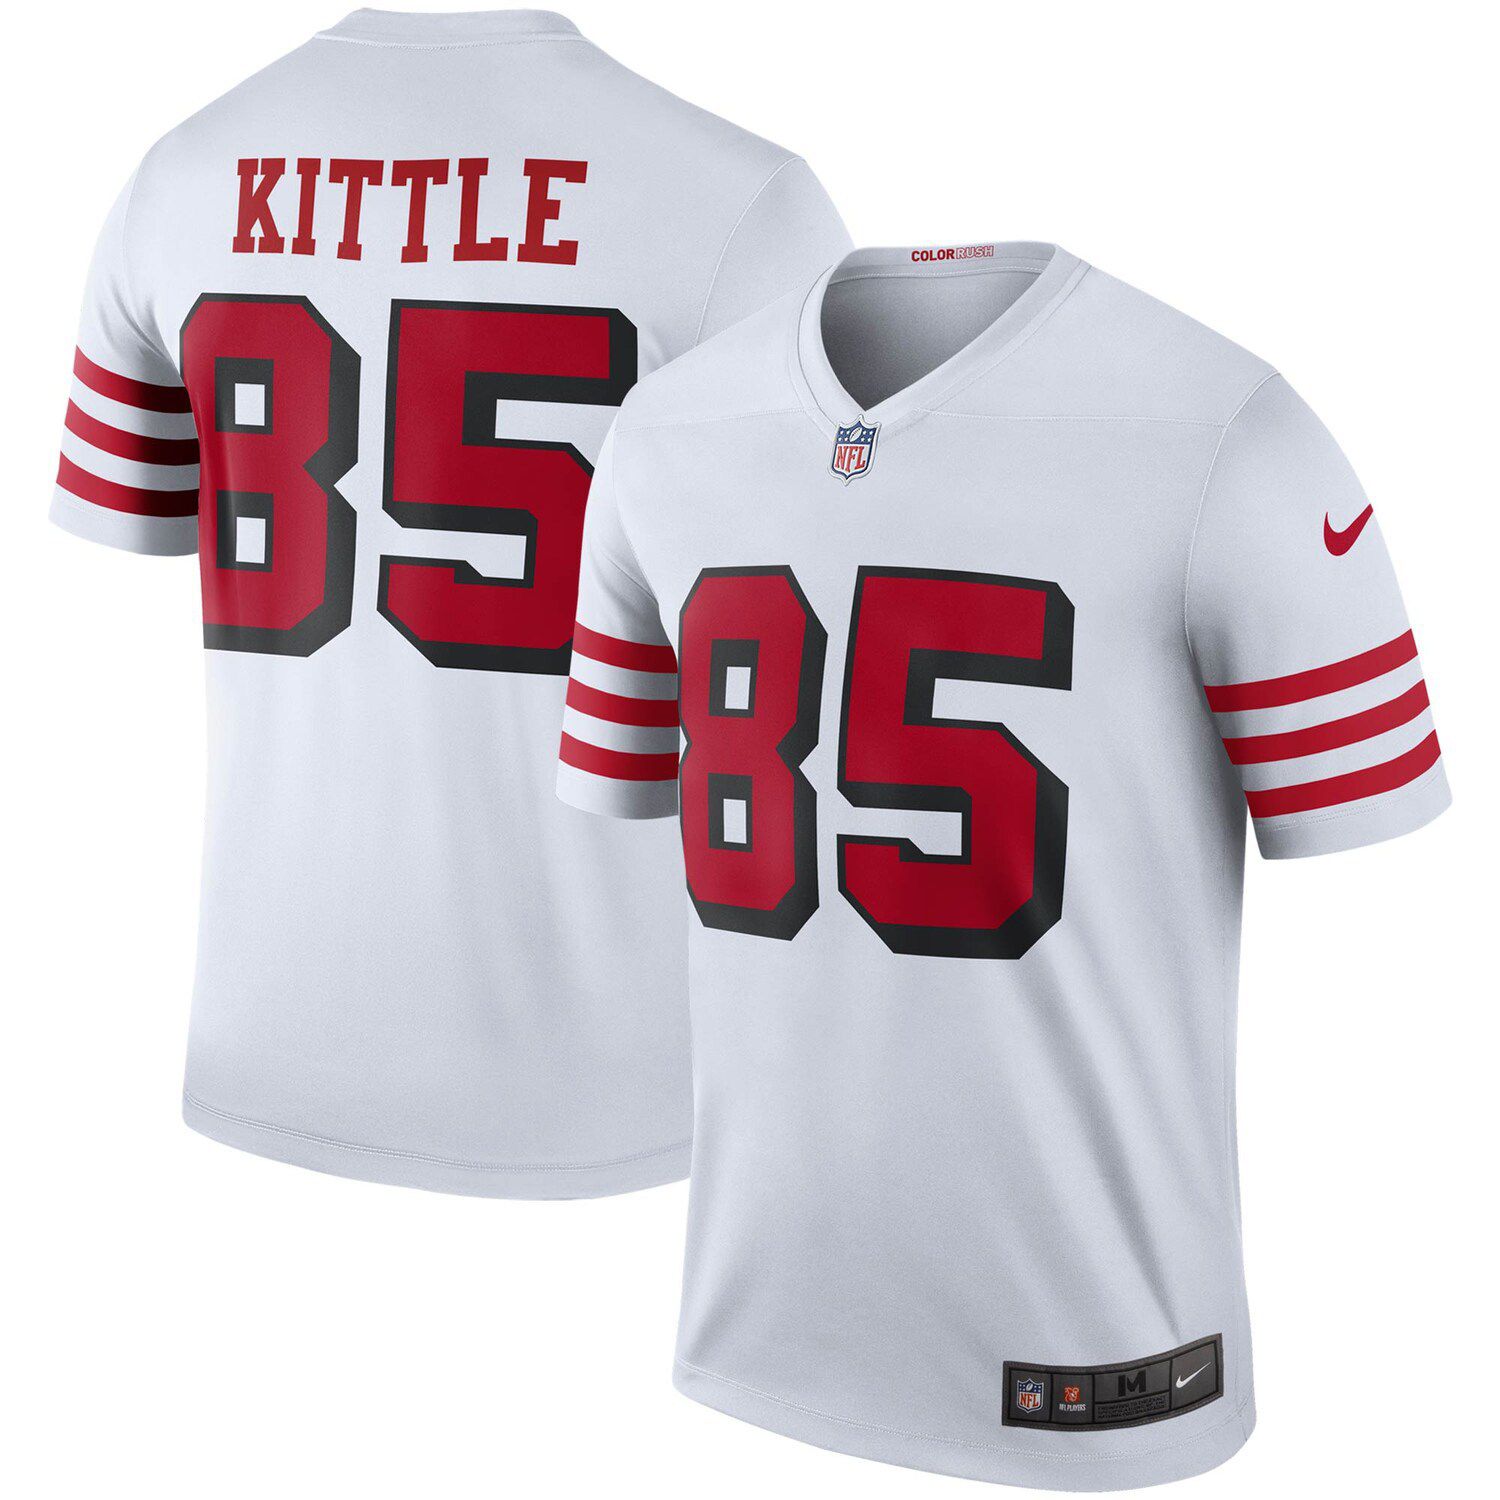 kittle vapor limited jersey